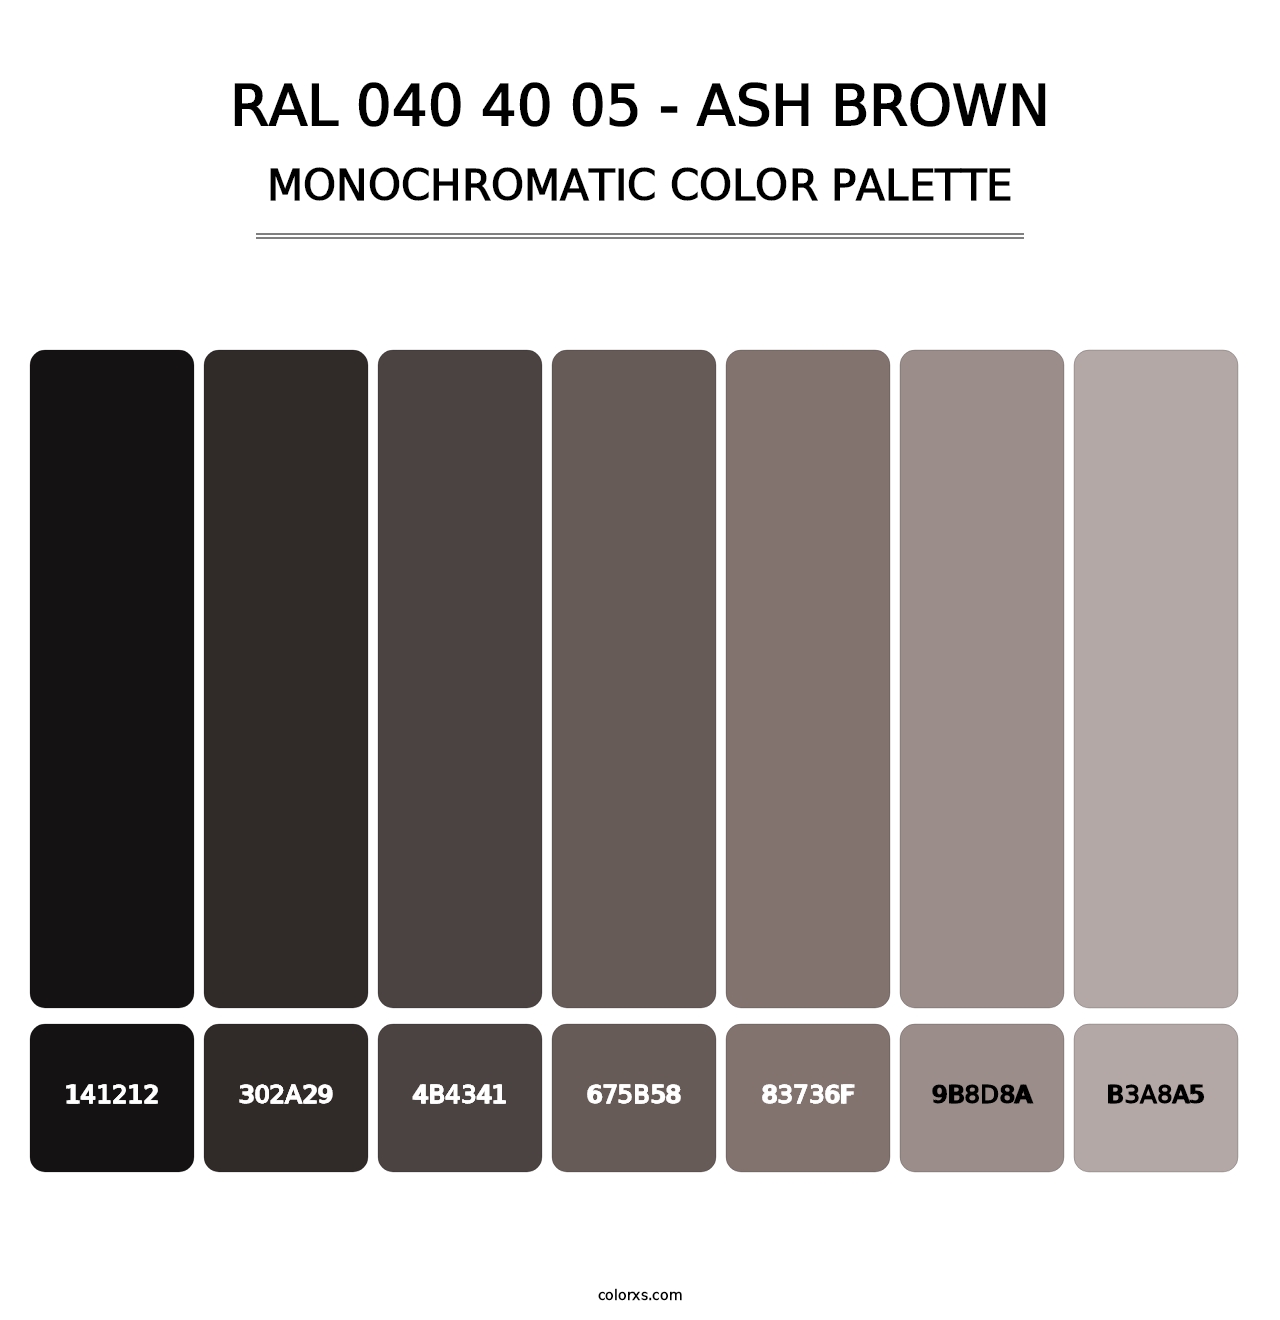 RAL 040 40 05 - Ash Brown - Monochromatic Color Palette